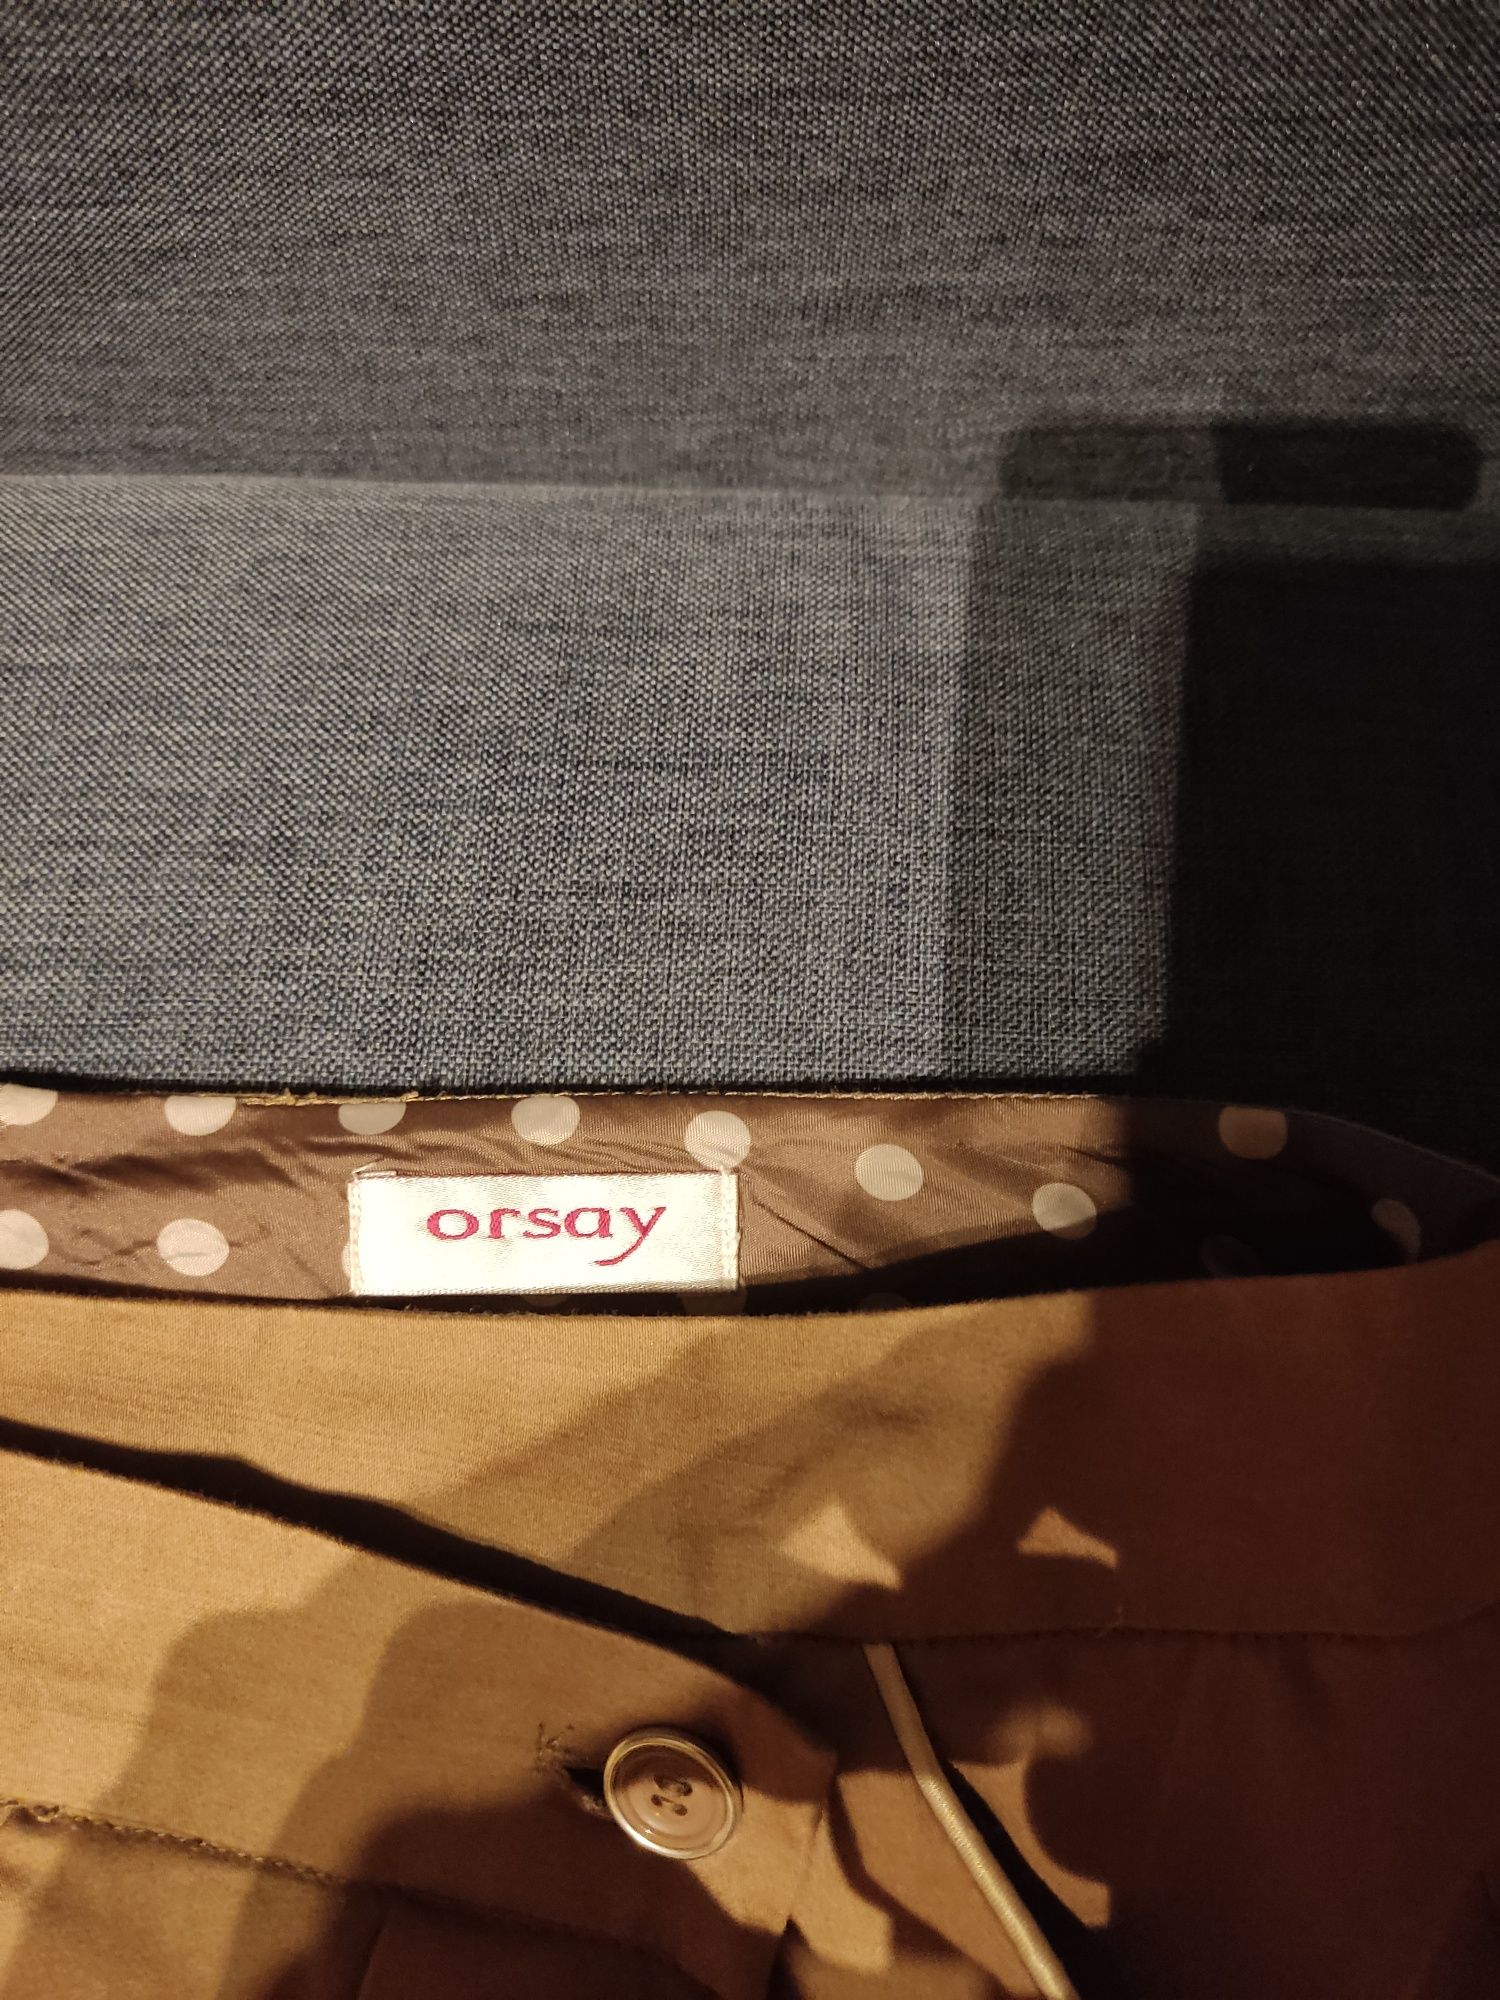 Spódnica brązowa marki Orsay rozmiar 38